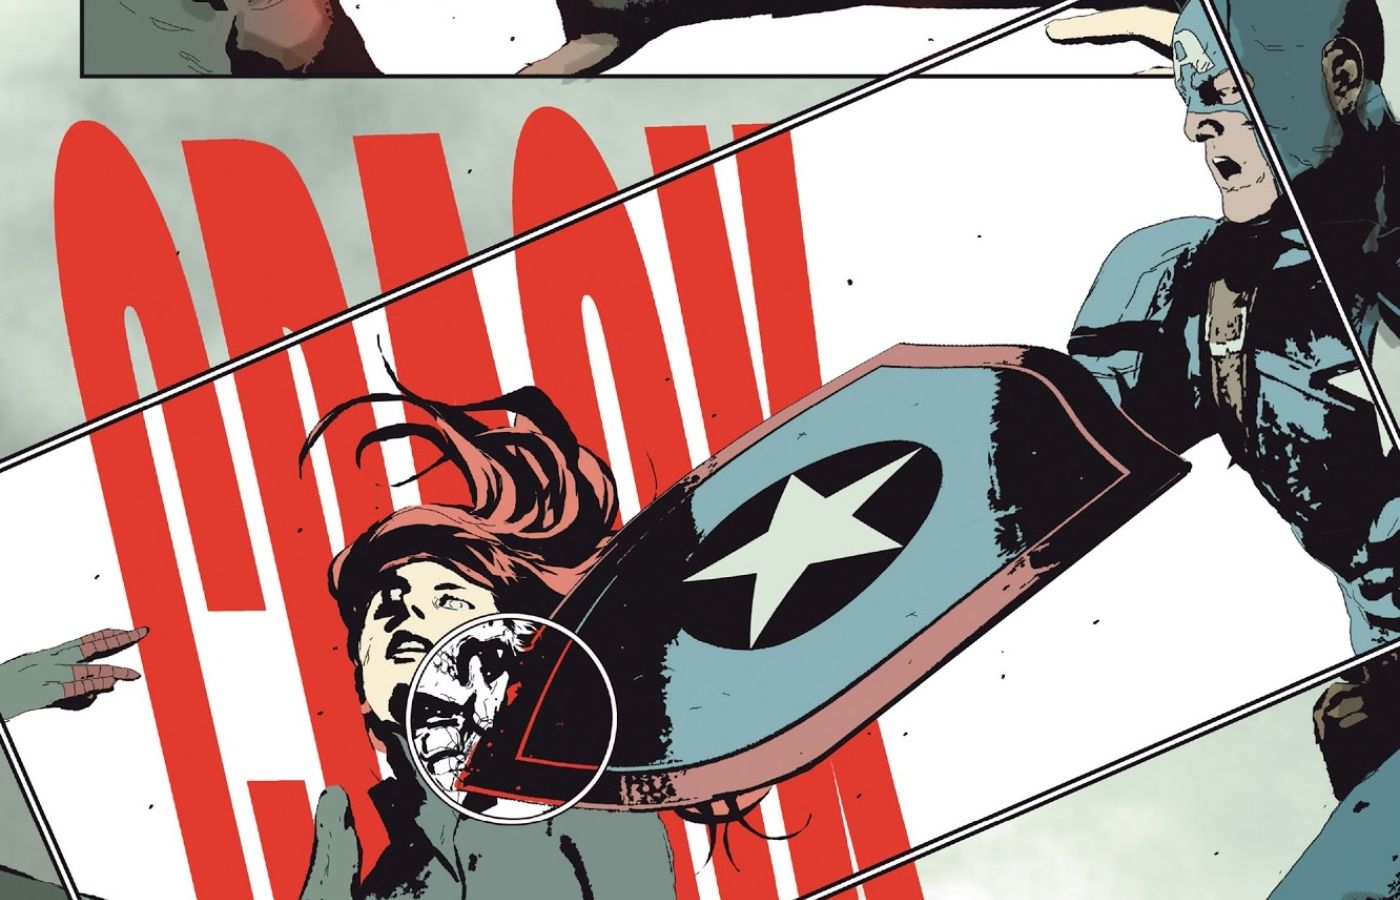 Evil Captain America killing Black Widow.